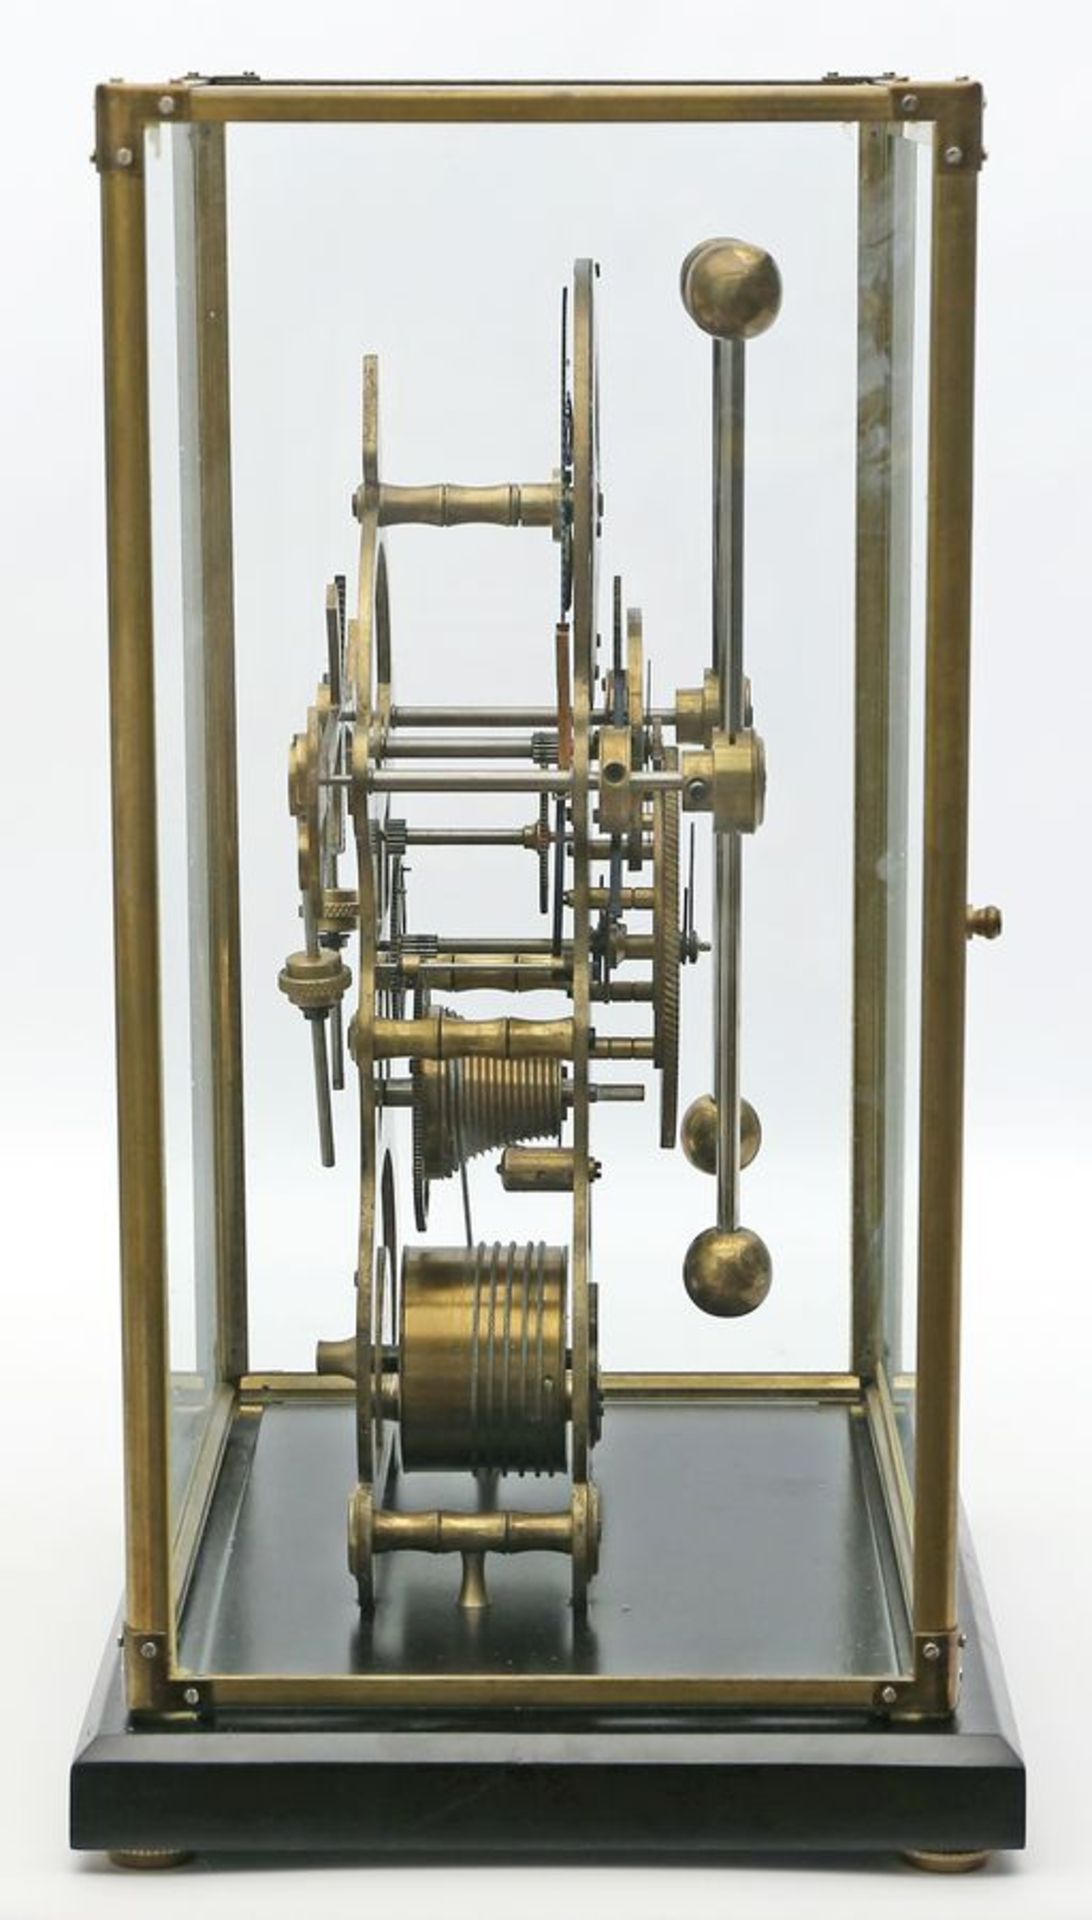 Skeletuhr "John Harrison Moonphase Sea Clock", Sinclair Harding. - Image 2 of 3